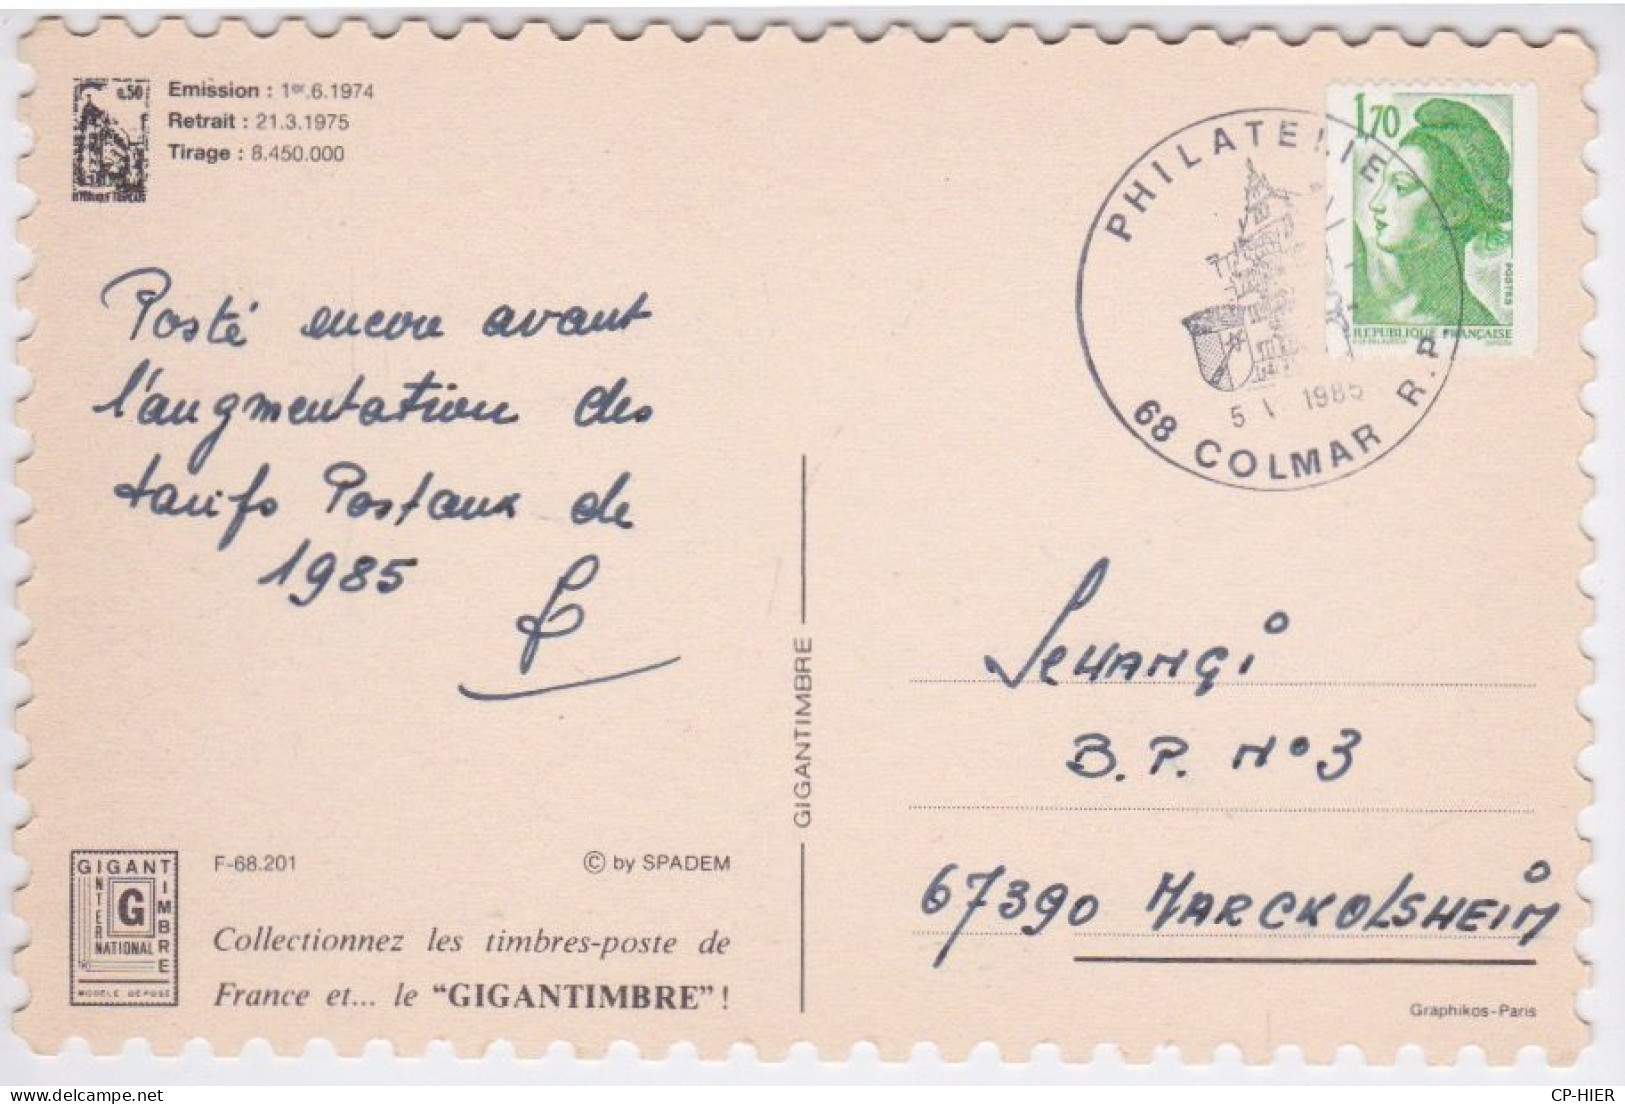 TIMBRE COLMAR POSTEE AVANT L'AUGMENTATION DES TARIFS POSTAUX DE 1985 - CACHET PHILATELIE COLMAR 5 VI 1985 - Briefmarken (Abbildungen)